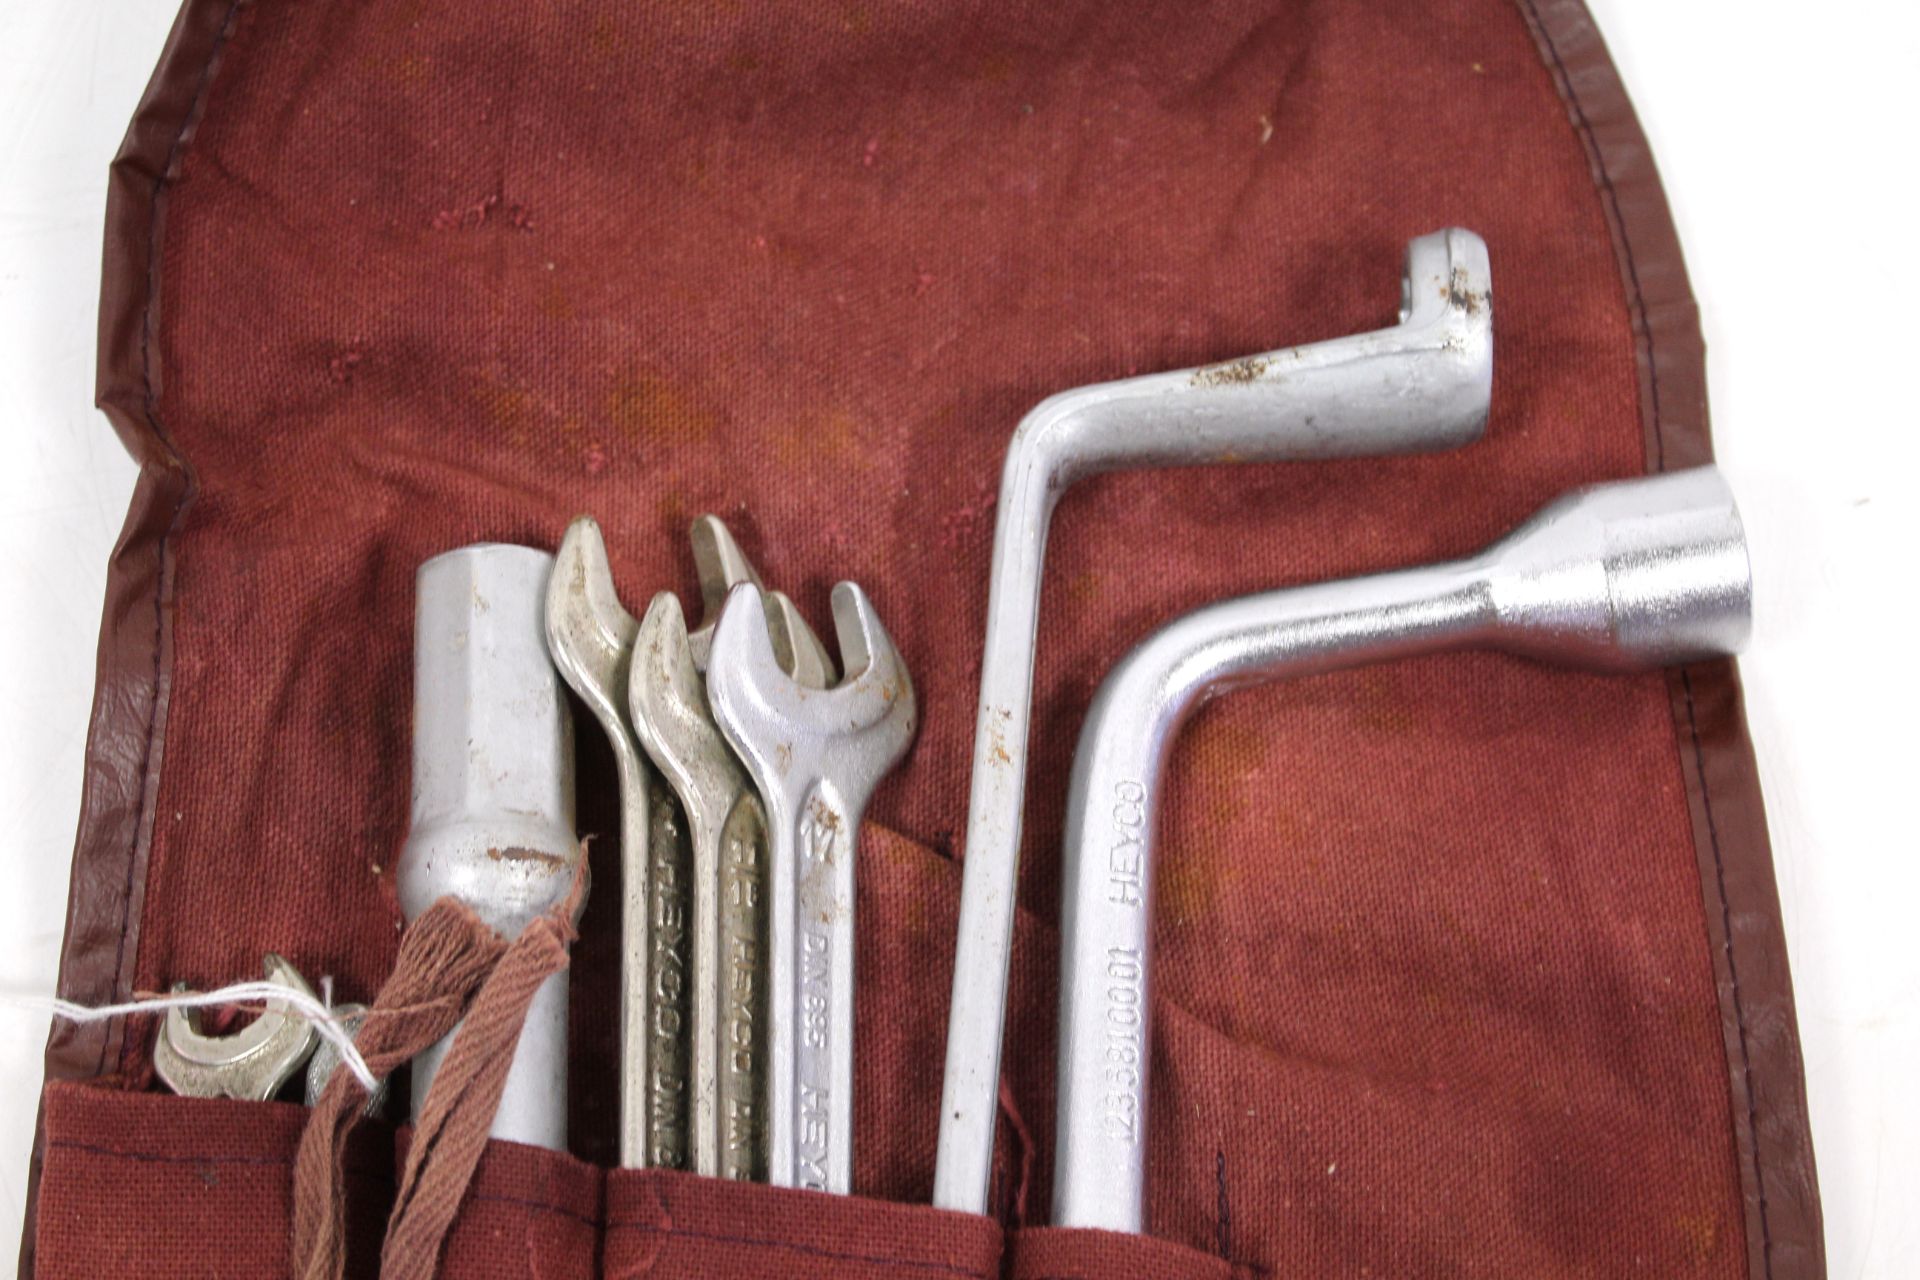 A vintage Mercedes MB SL, SE SEL tool kit circa 19 - Image 4 of 4